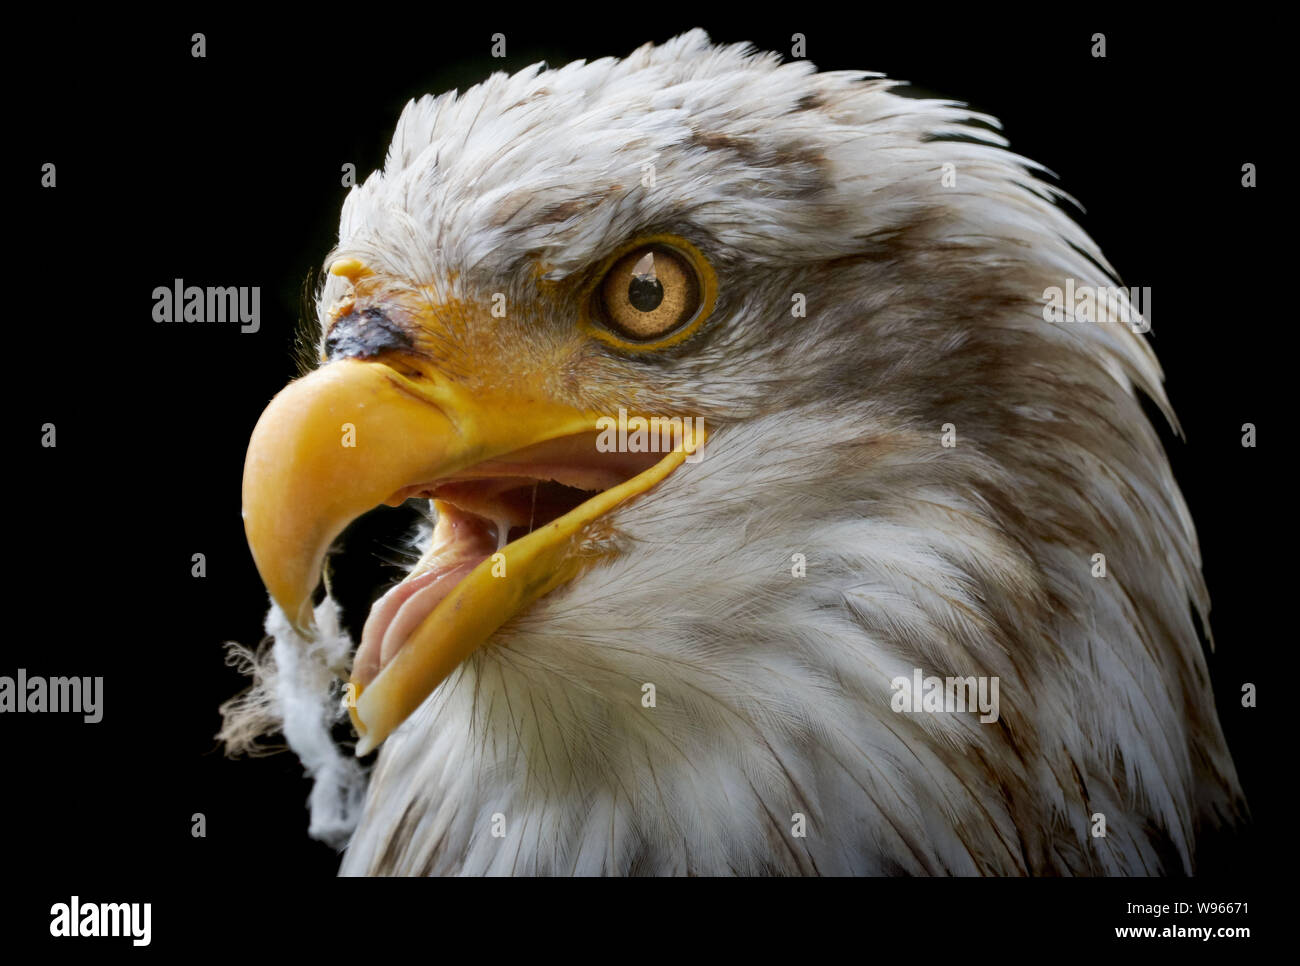 Bald eagle head (Haliaeetus leucocephalus) and black background Stock Photo